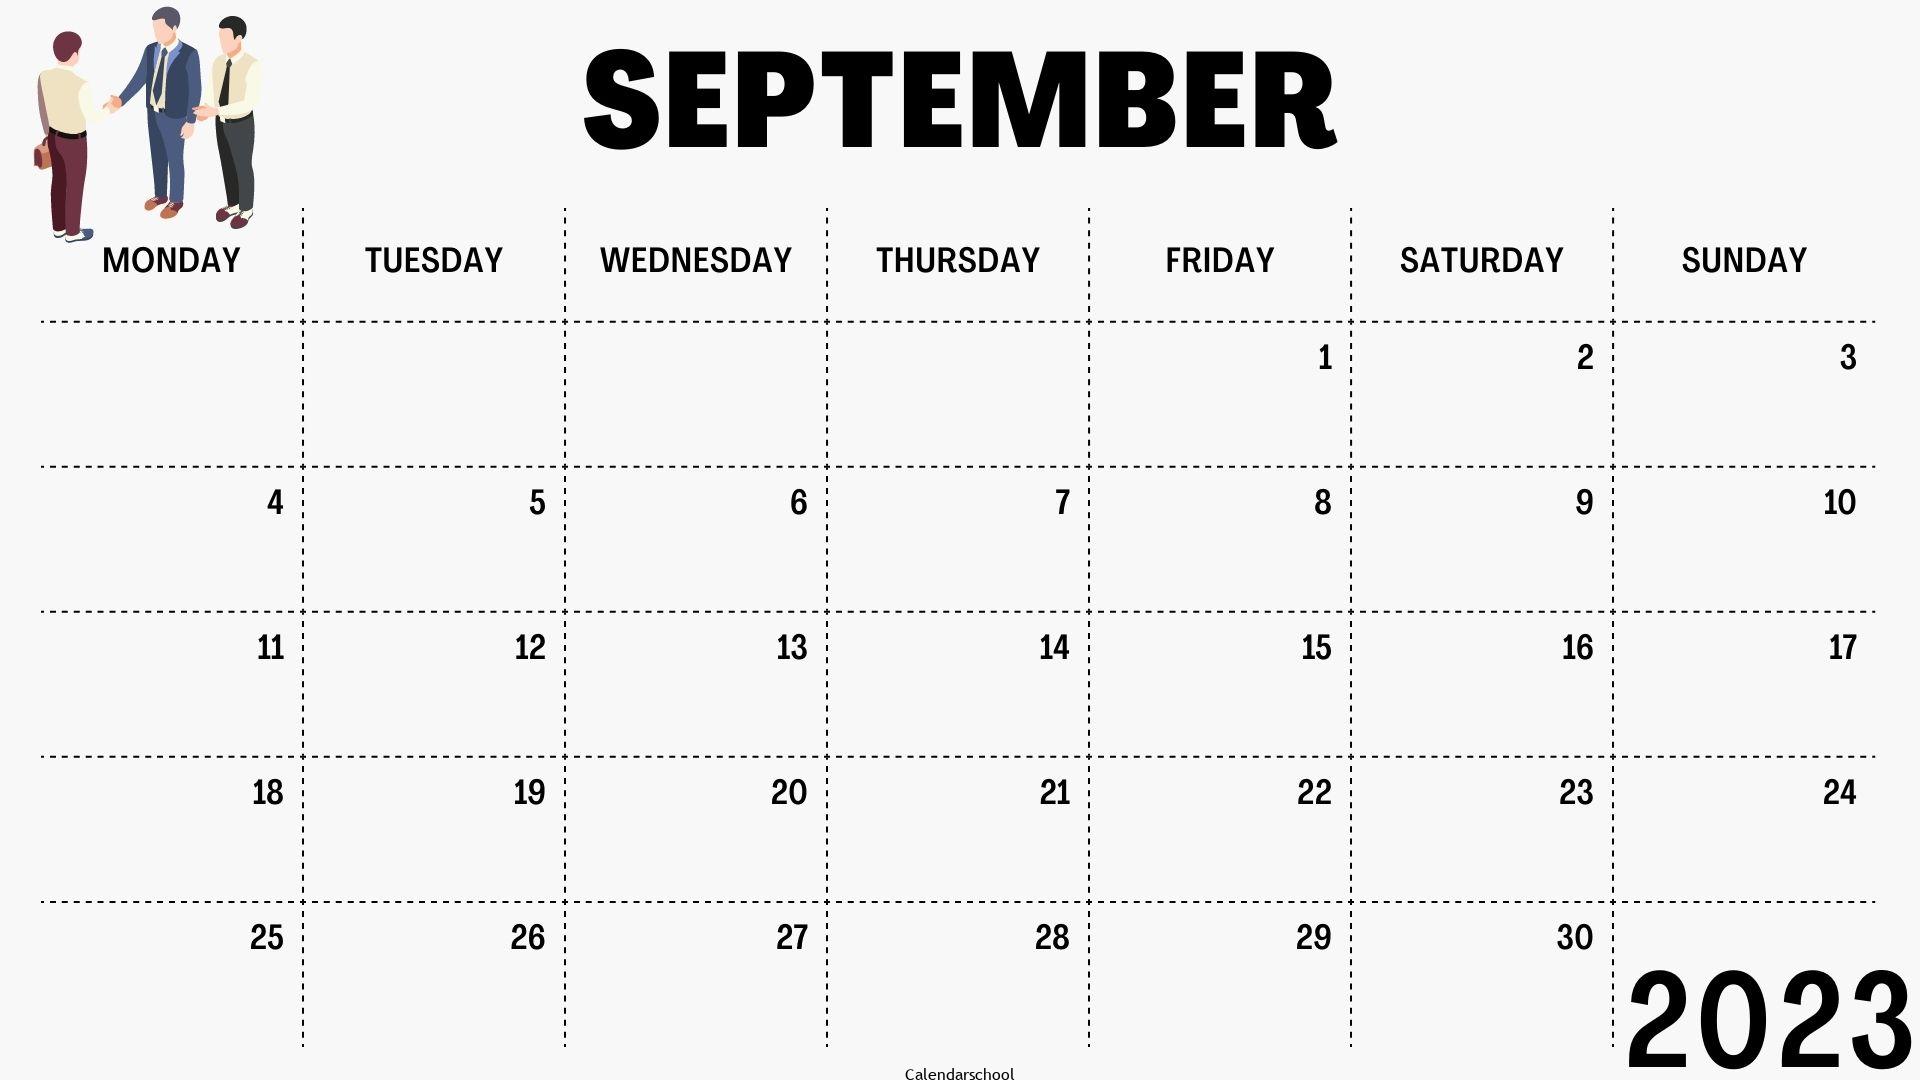 Calendar September 2023 By Week